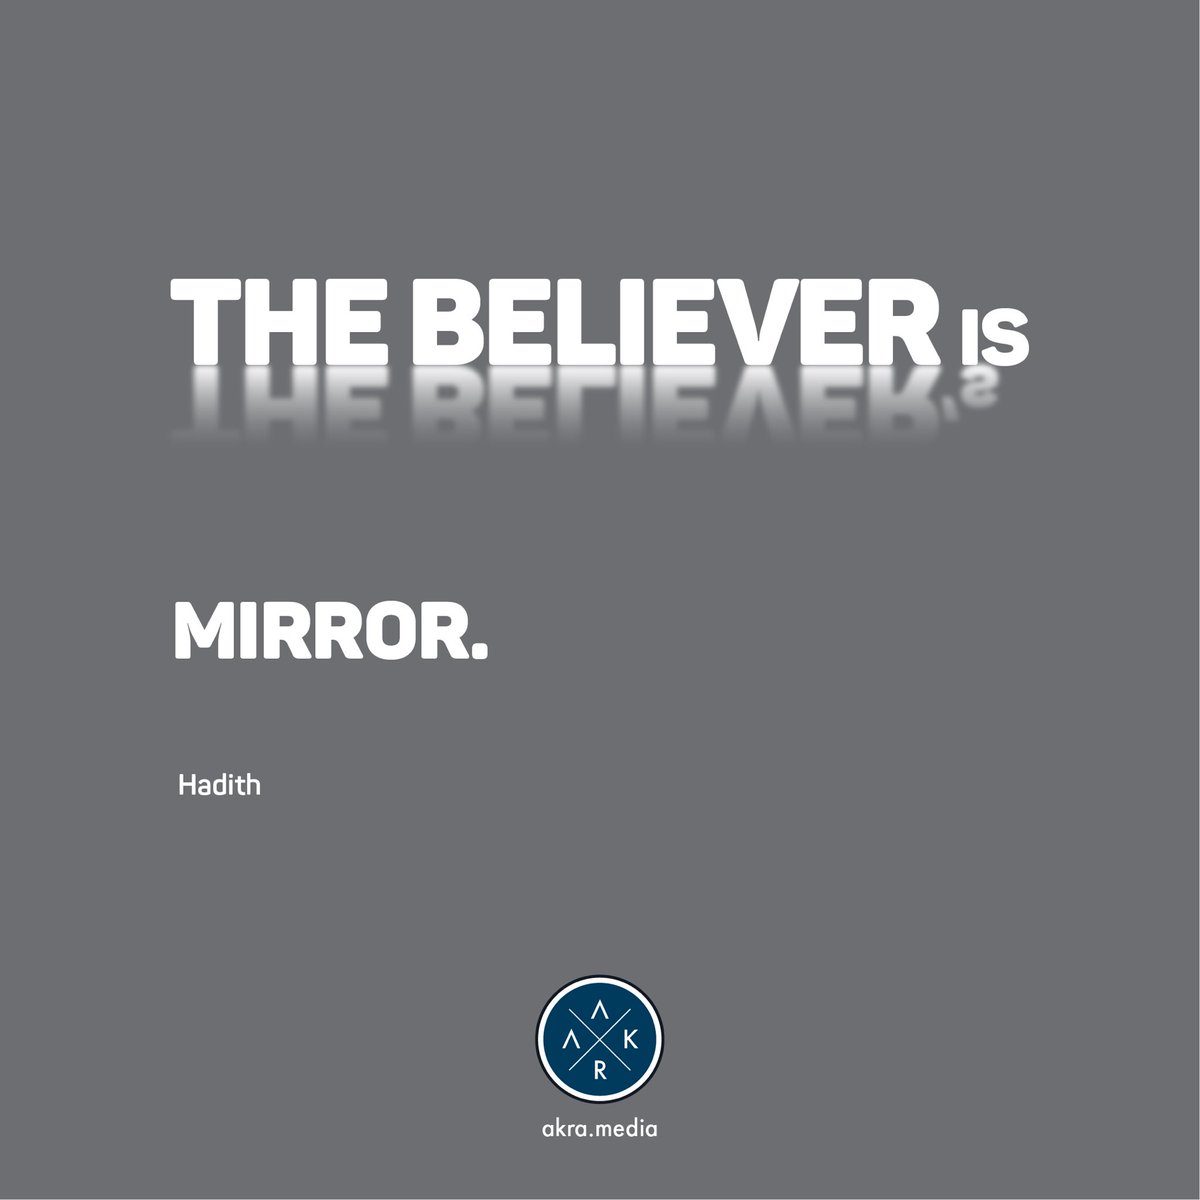 The believer is the believer’s mirror.
-Hadith

#hadith #hadithoftheday #hadith4_life #prophetmuhammadﷺ #muslim #islam #mirror #typography #islamicquotes